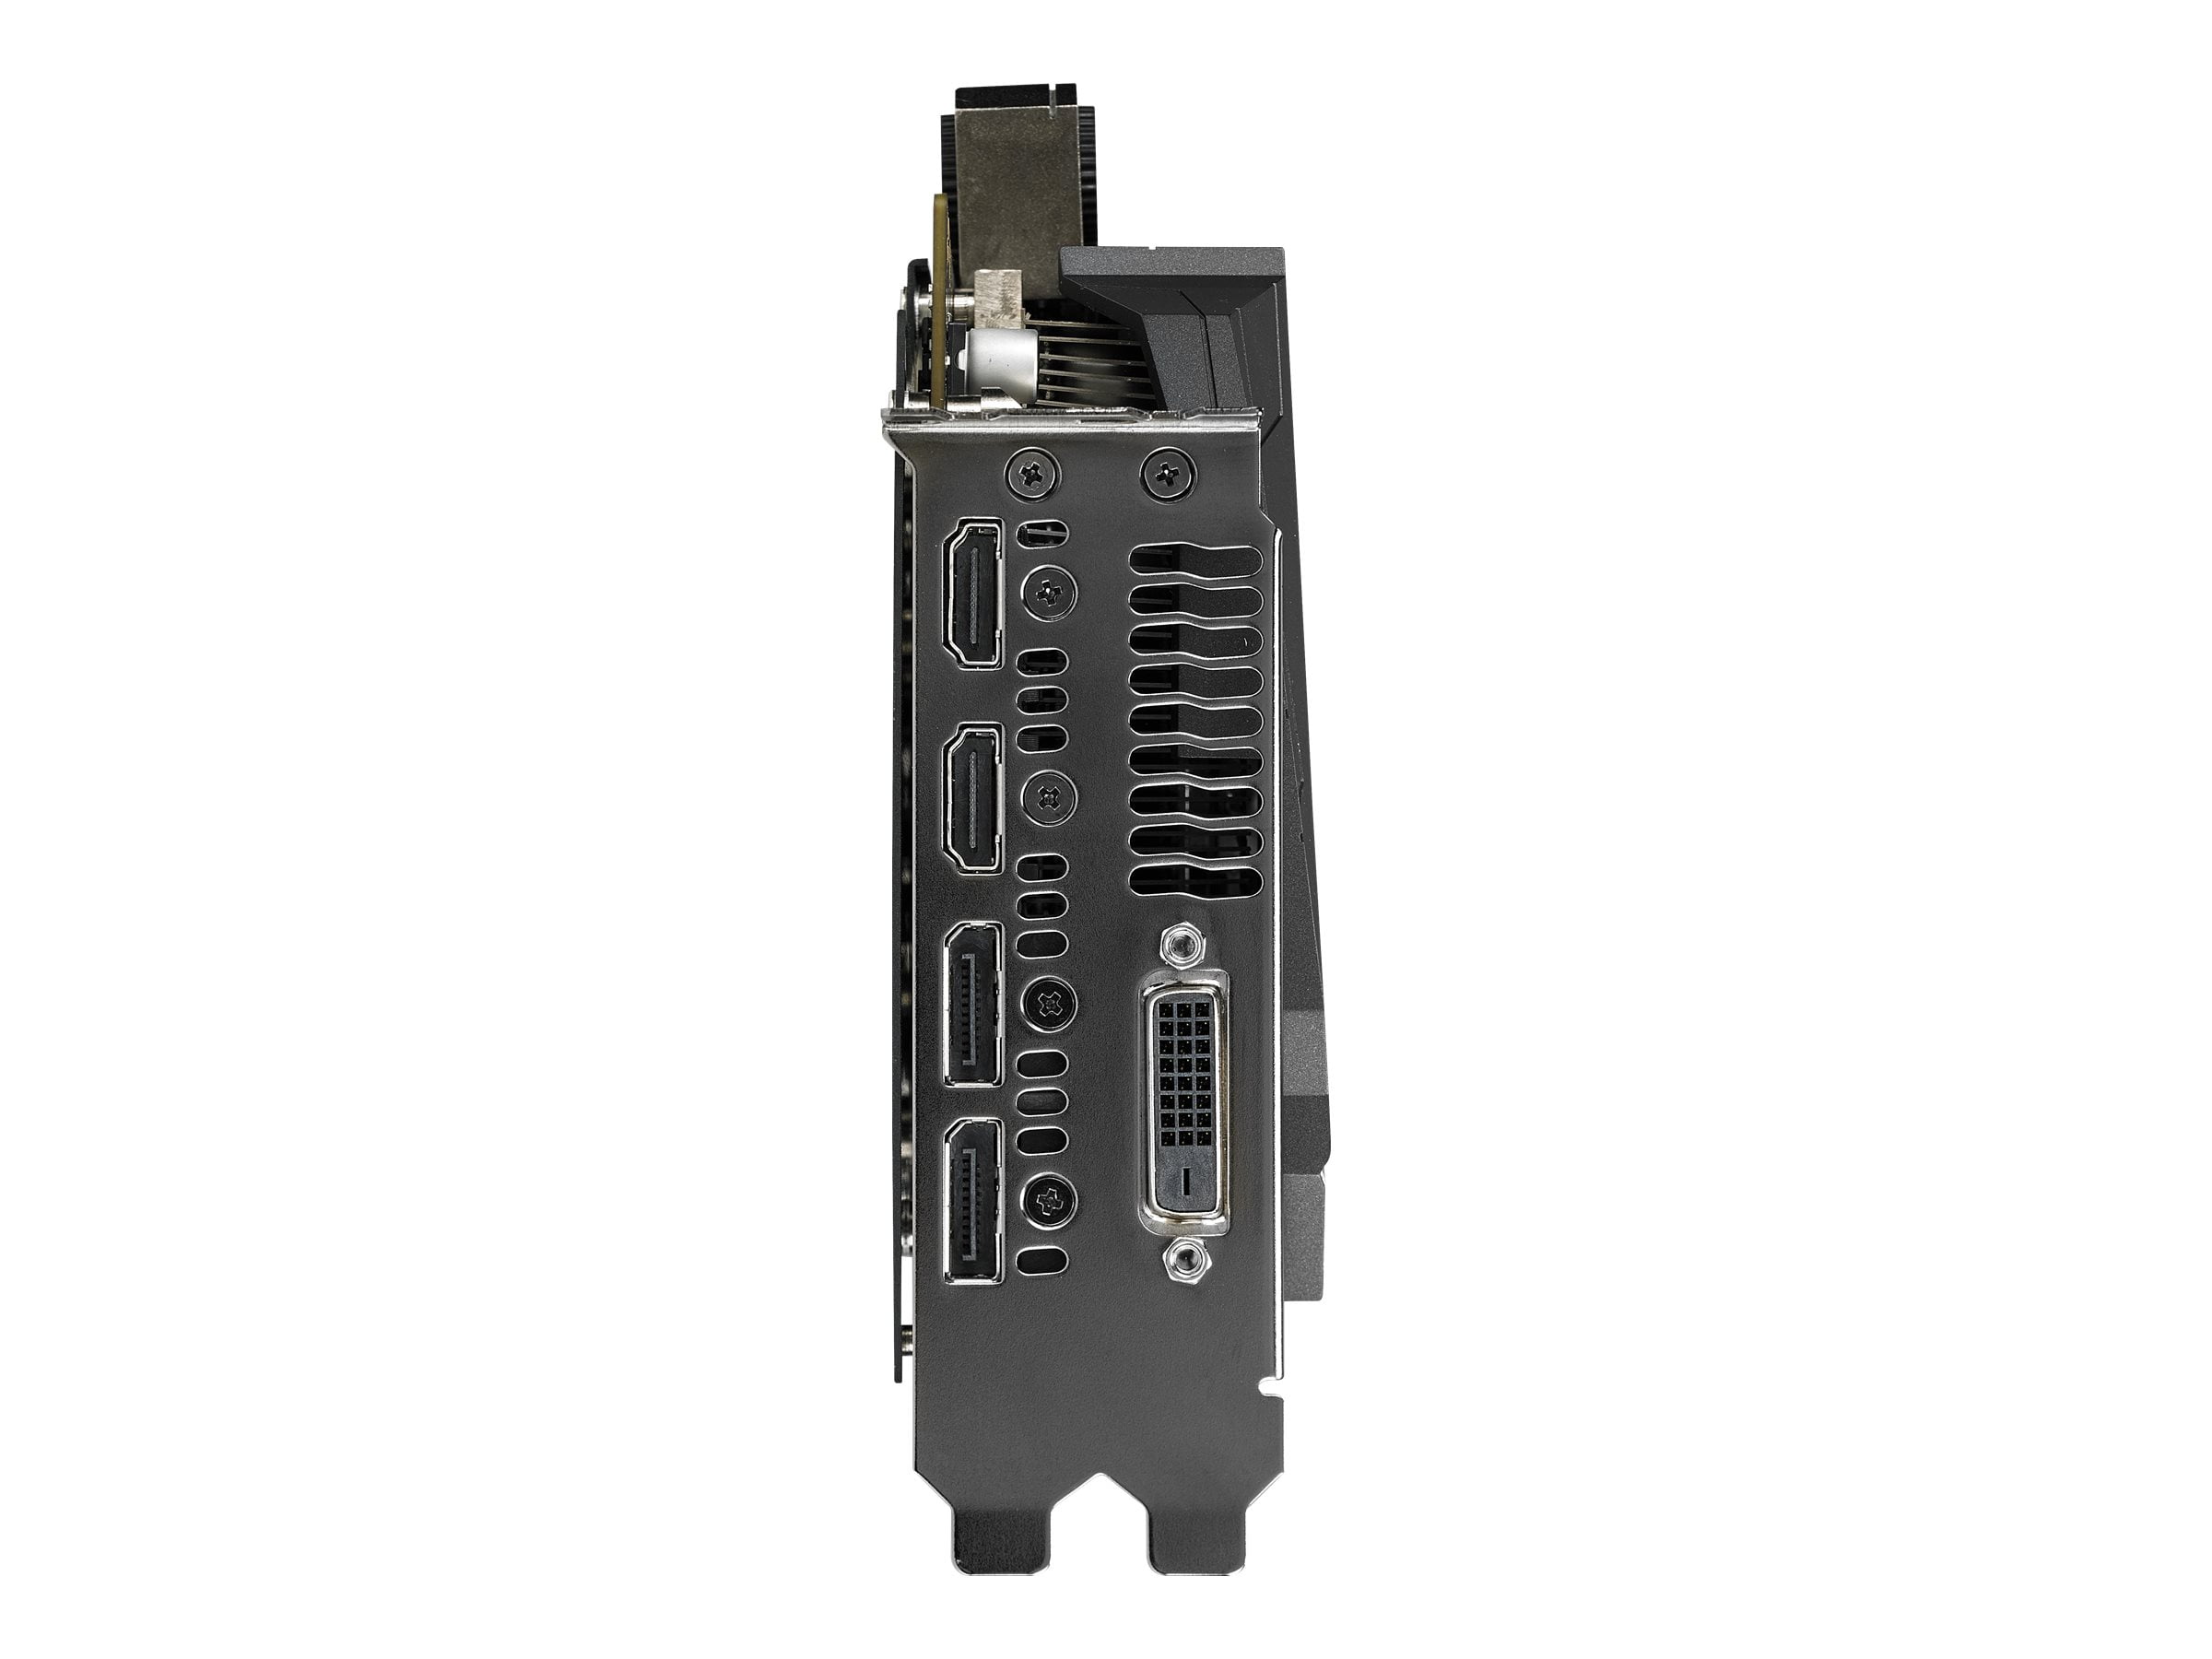 ASUS ROG-POSEIDON-GTX1080TI-P11G-GAMING - Edition - graphics card - GF GTX 1080 Ti - GDDR5X - PCIe x16 - DVI, 2 x HDMI, 2 x DisplayPort - Walmart.com